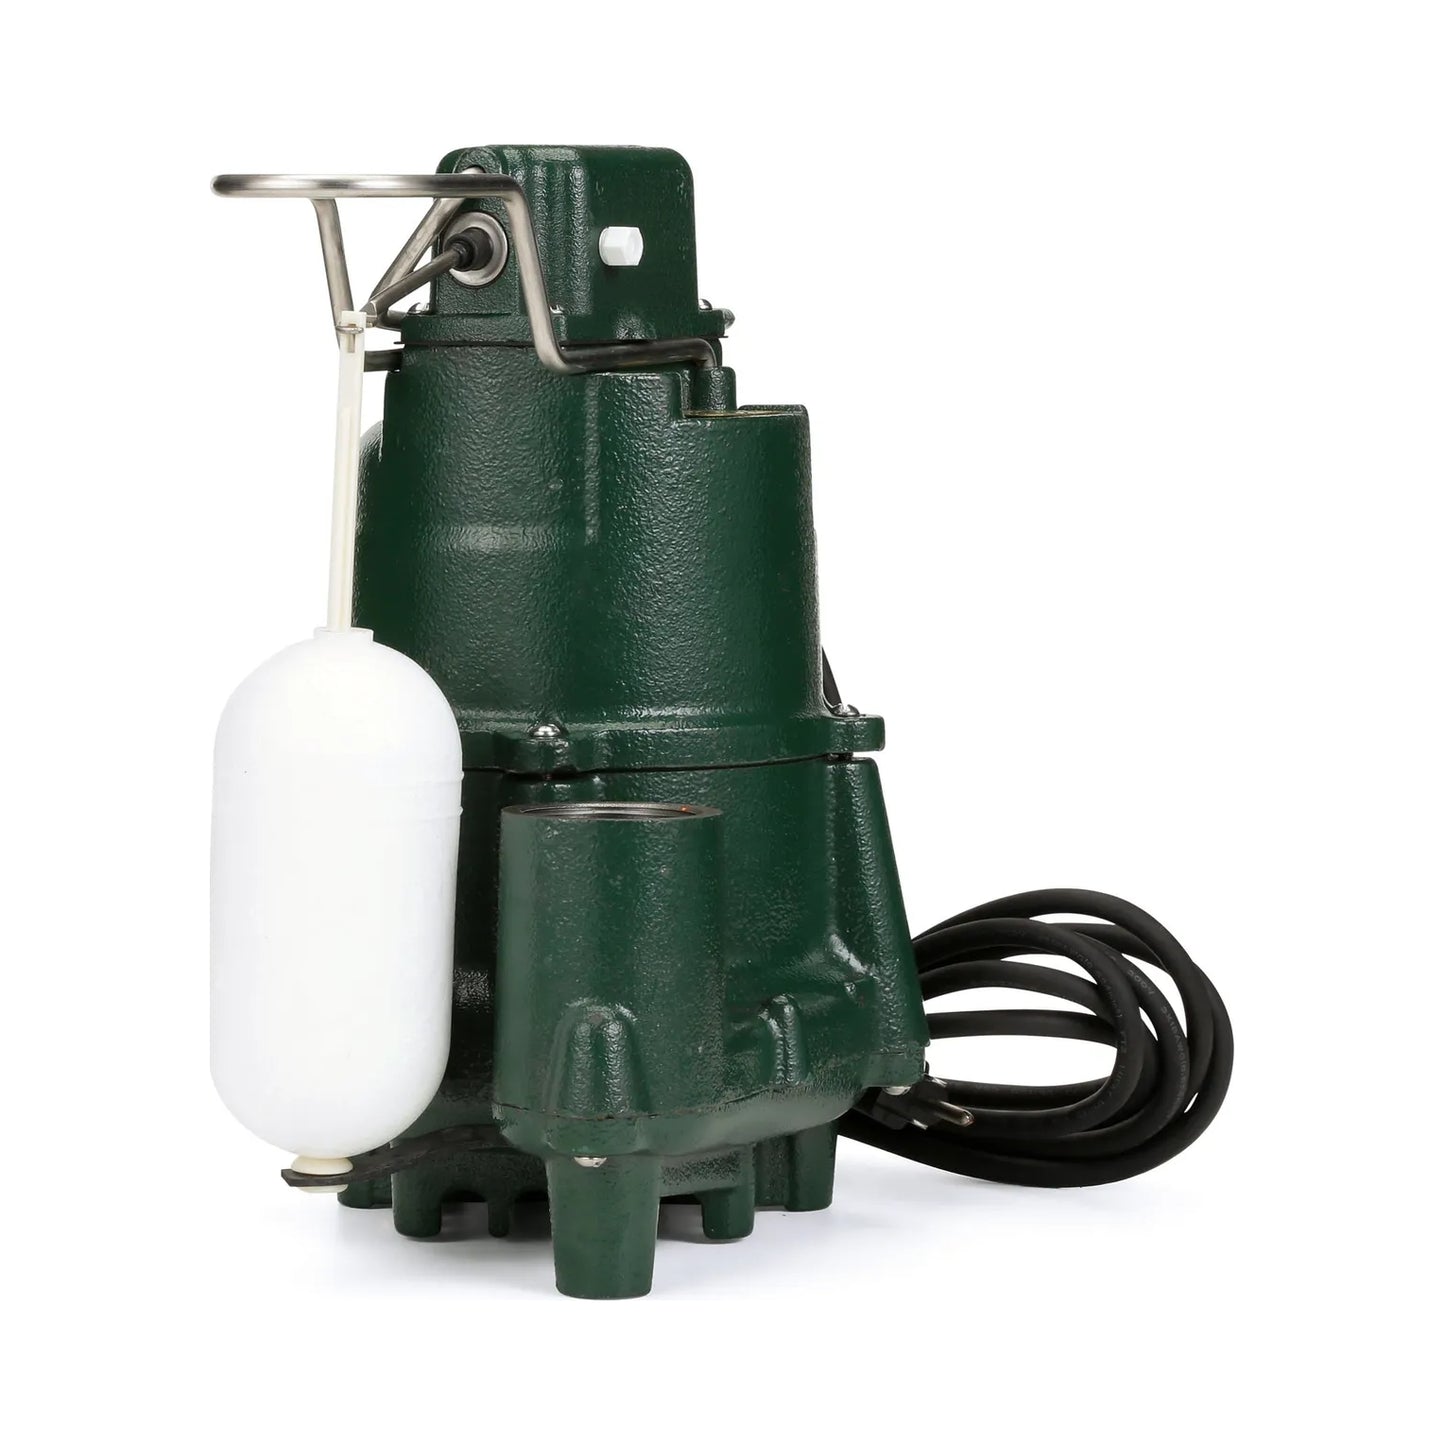 98-0001 - M98 Series Automatic Cast Iron Effluent Sump Pump, 115V, 1/2 HP